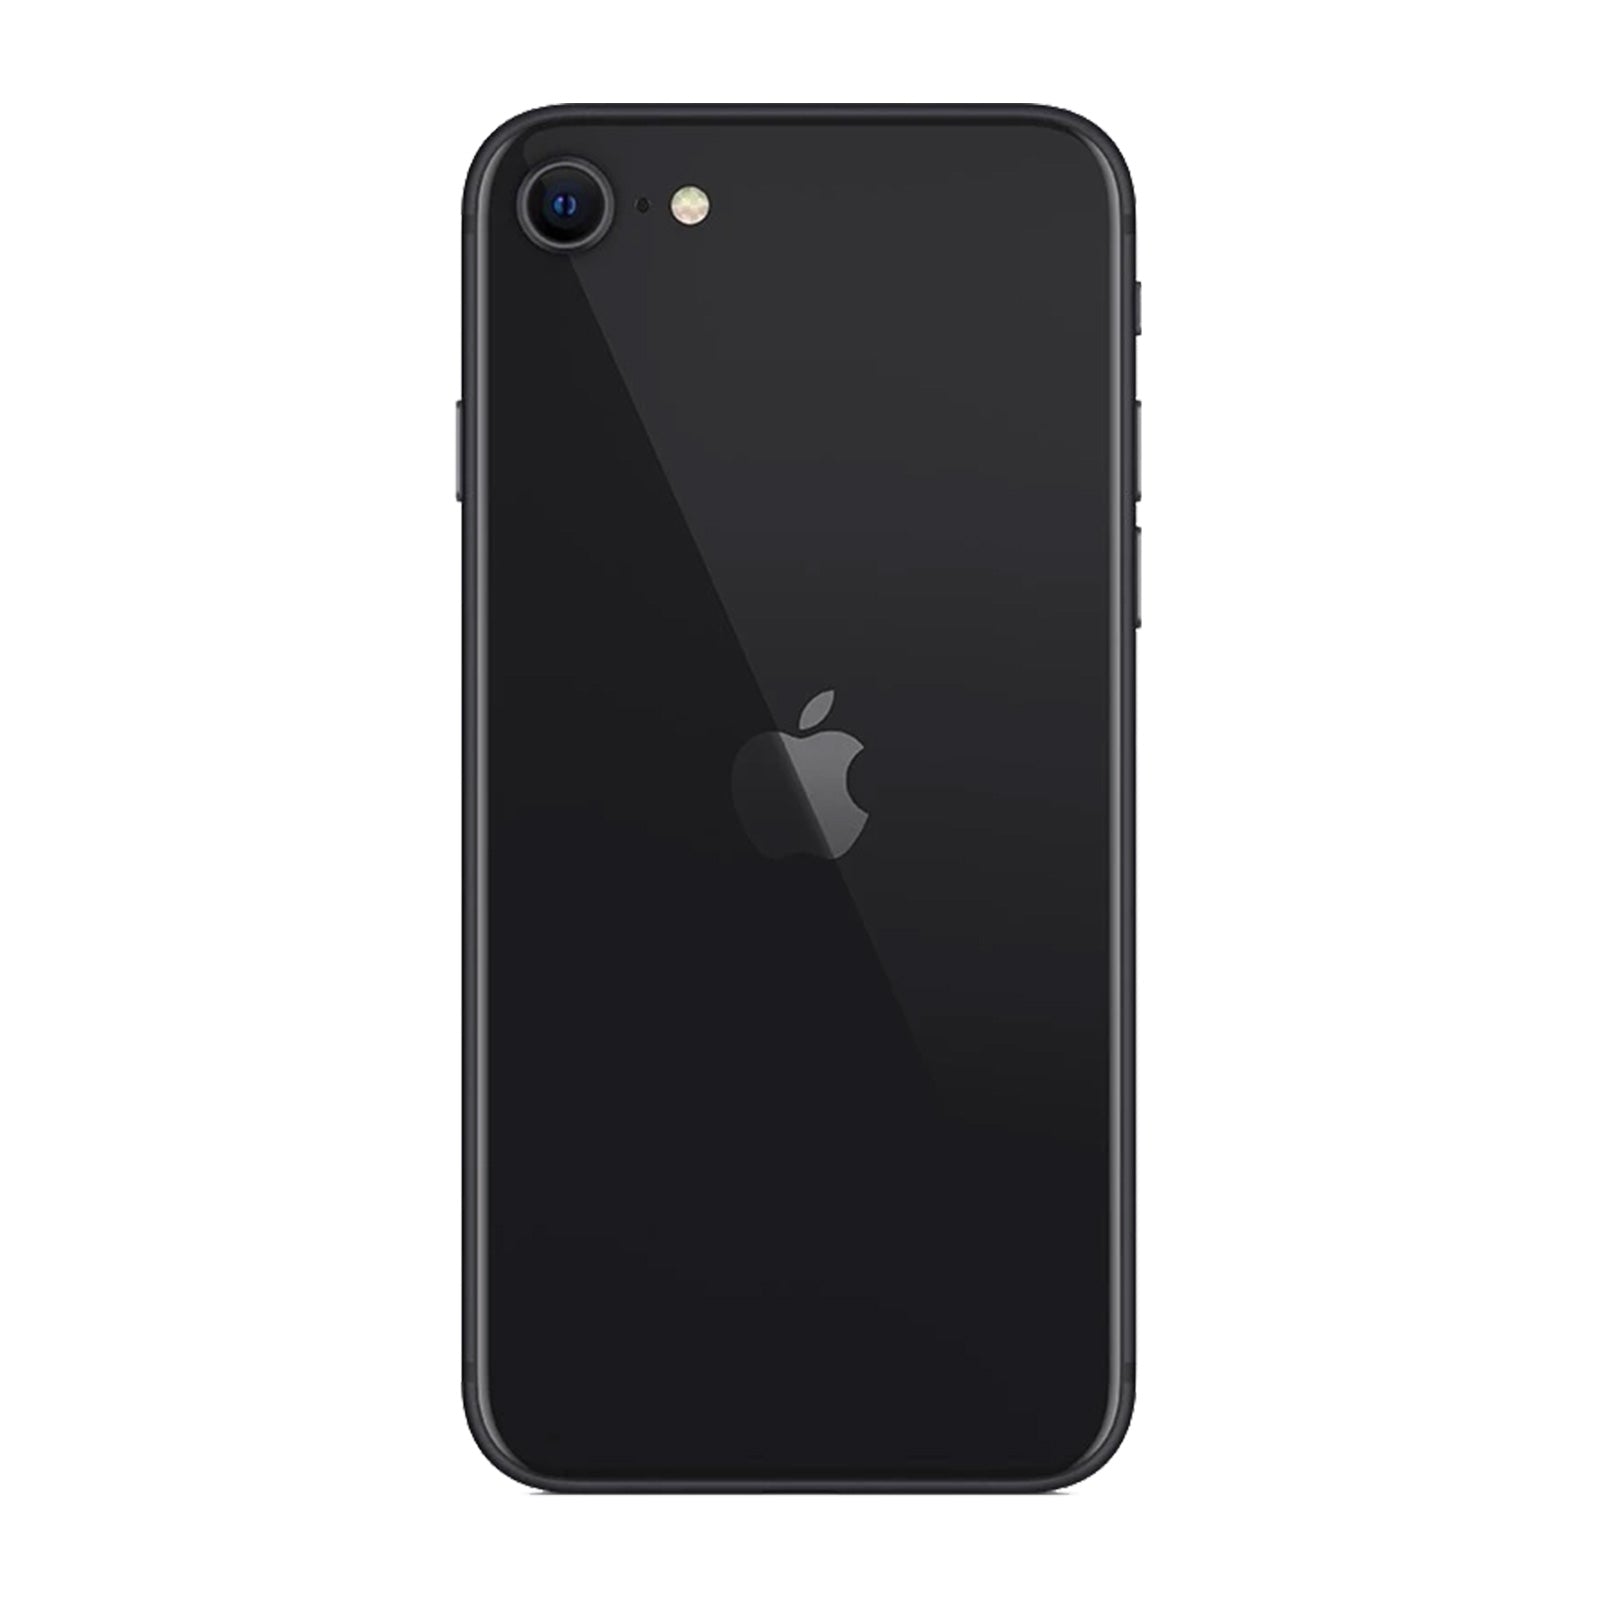 Apple iPhone SE 2nd Gen 64GB Black Fair Unlocked